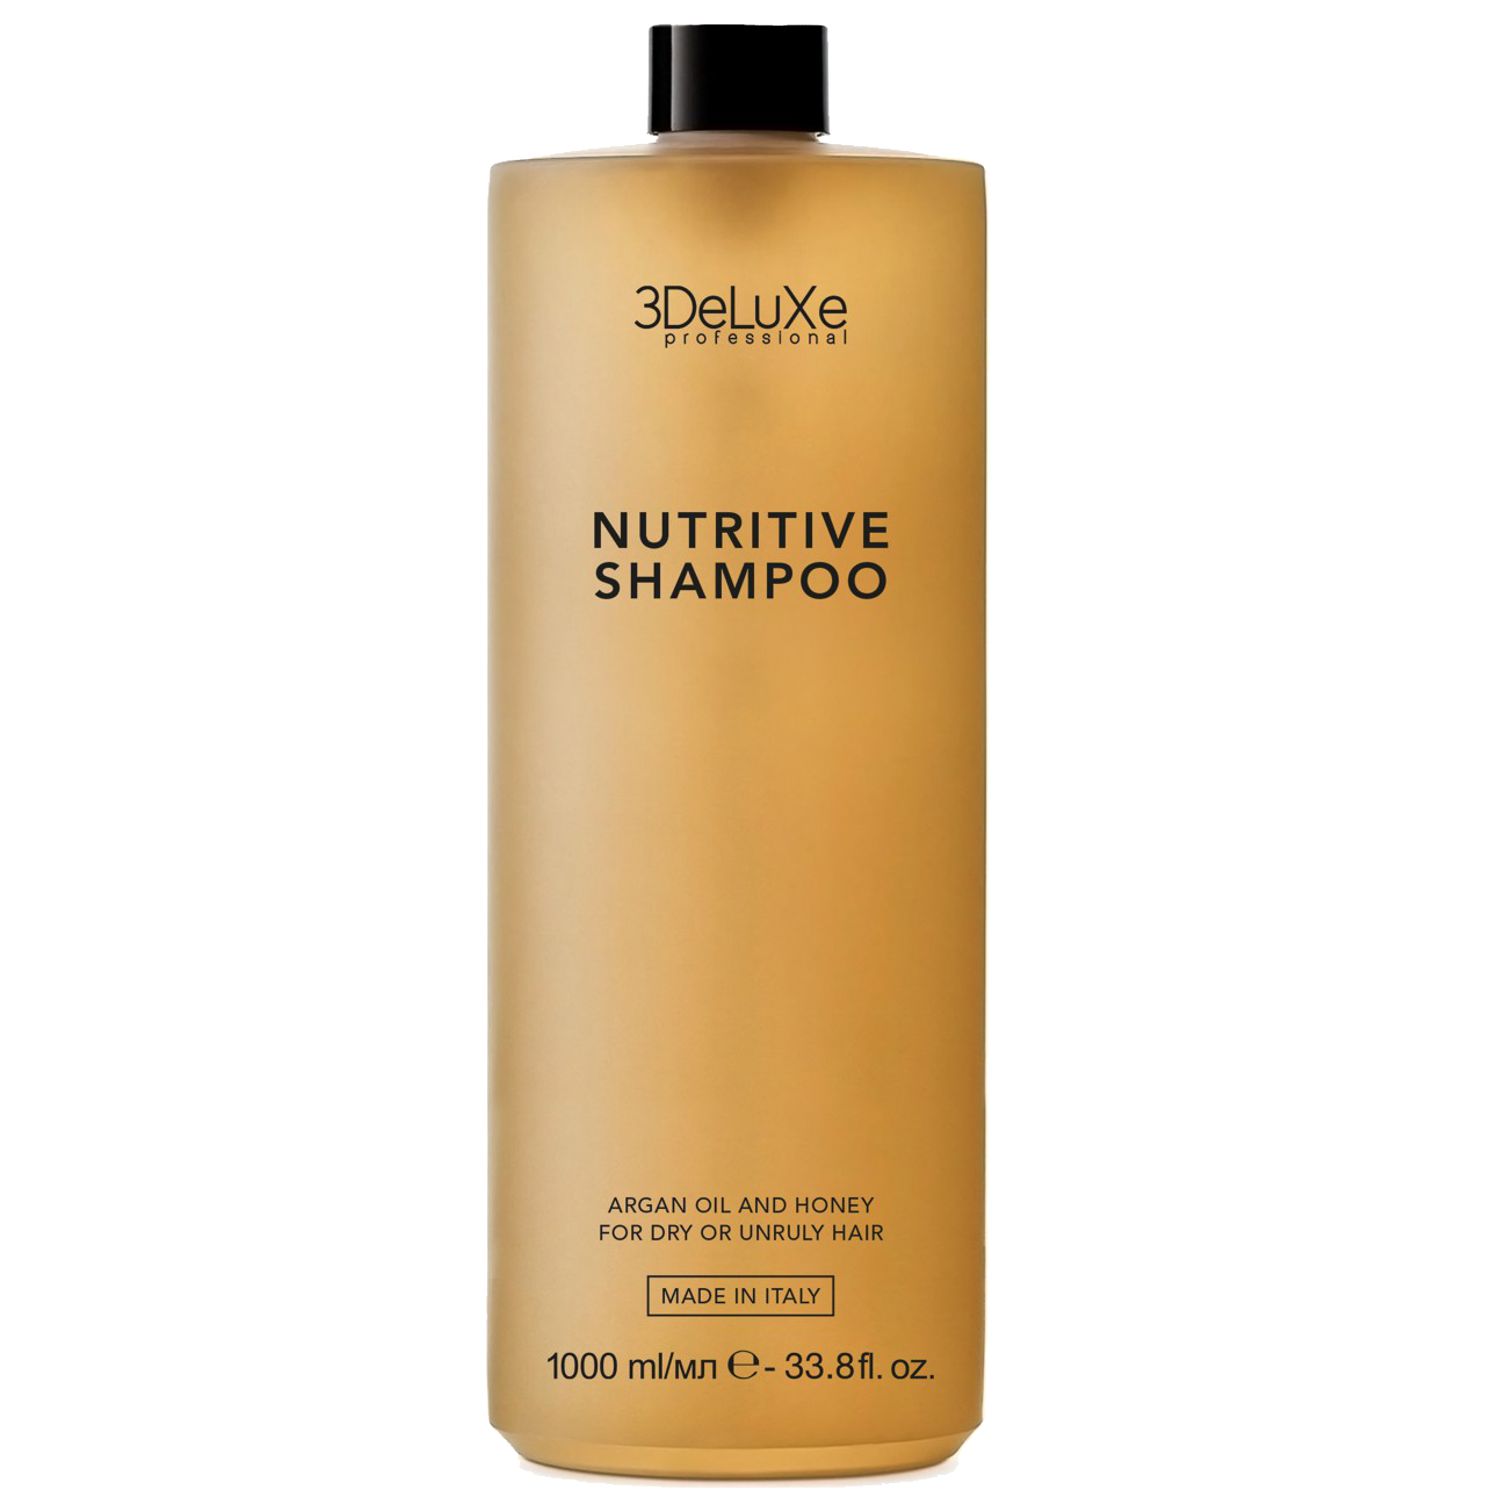 3DeLuXe Professional NUTRITIVE Shampoo 1 L